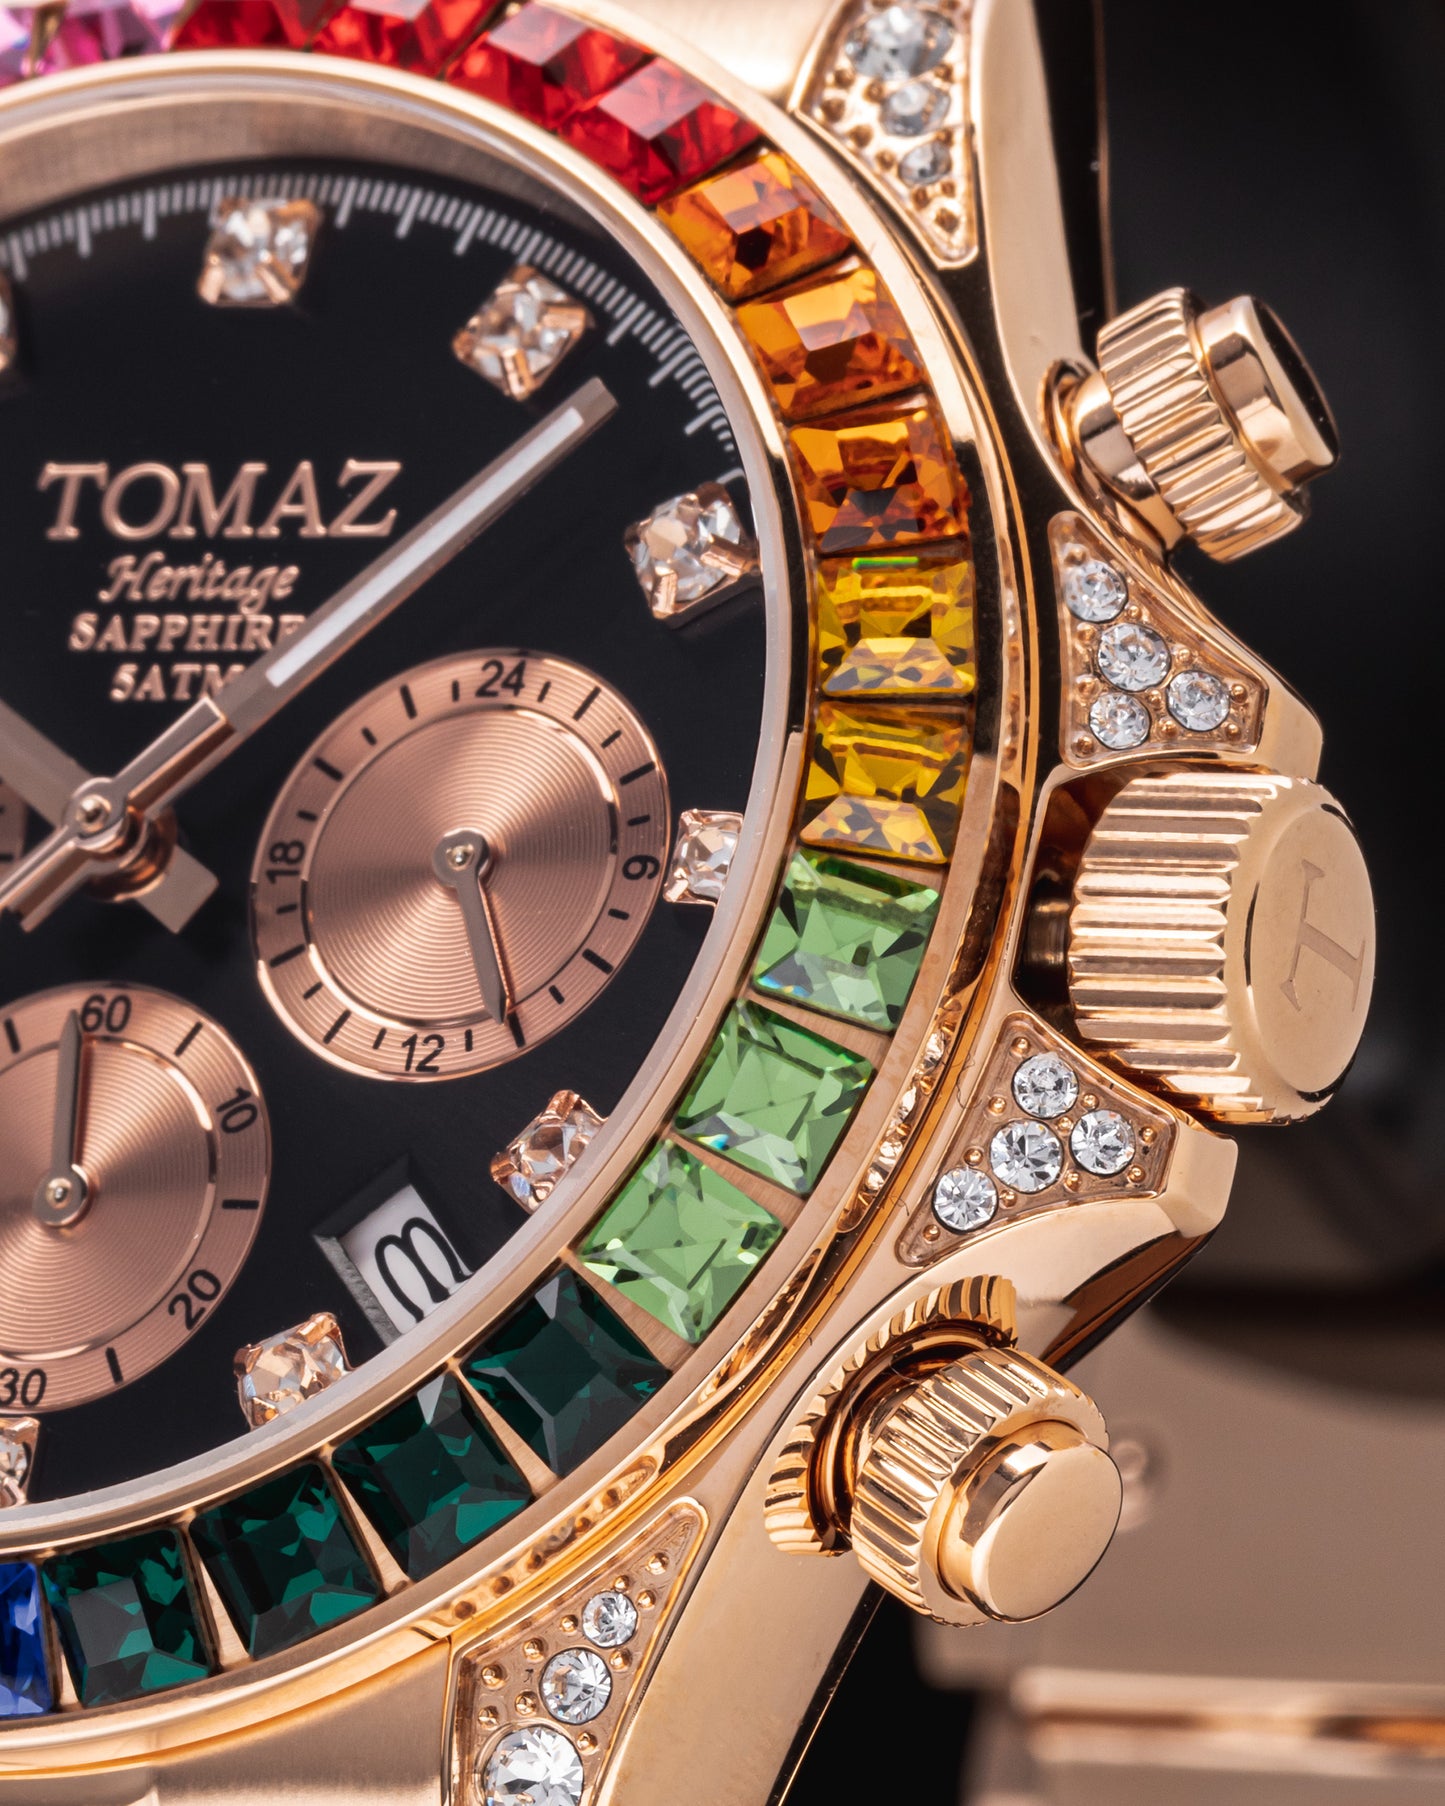 Tomaz Men's Watch GR02M-D1 (Rosegold/Black) with Rainbow Swarovski (Rosegold Stainless Steel)